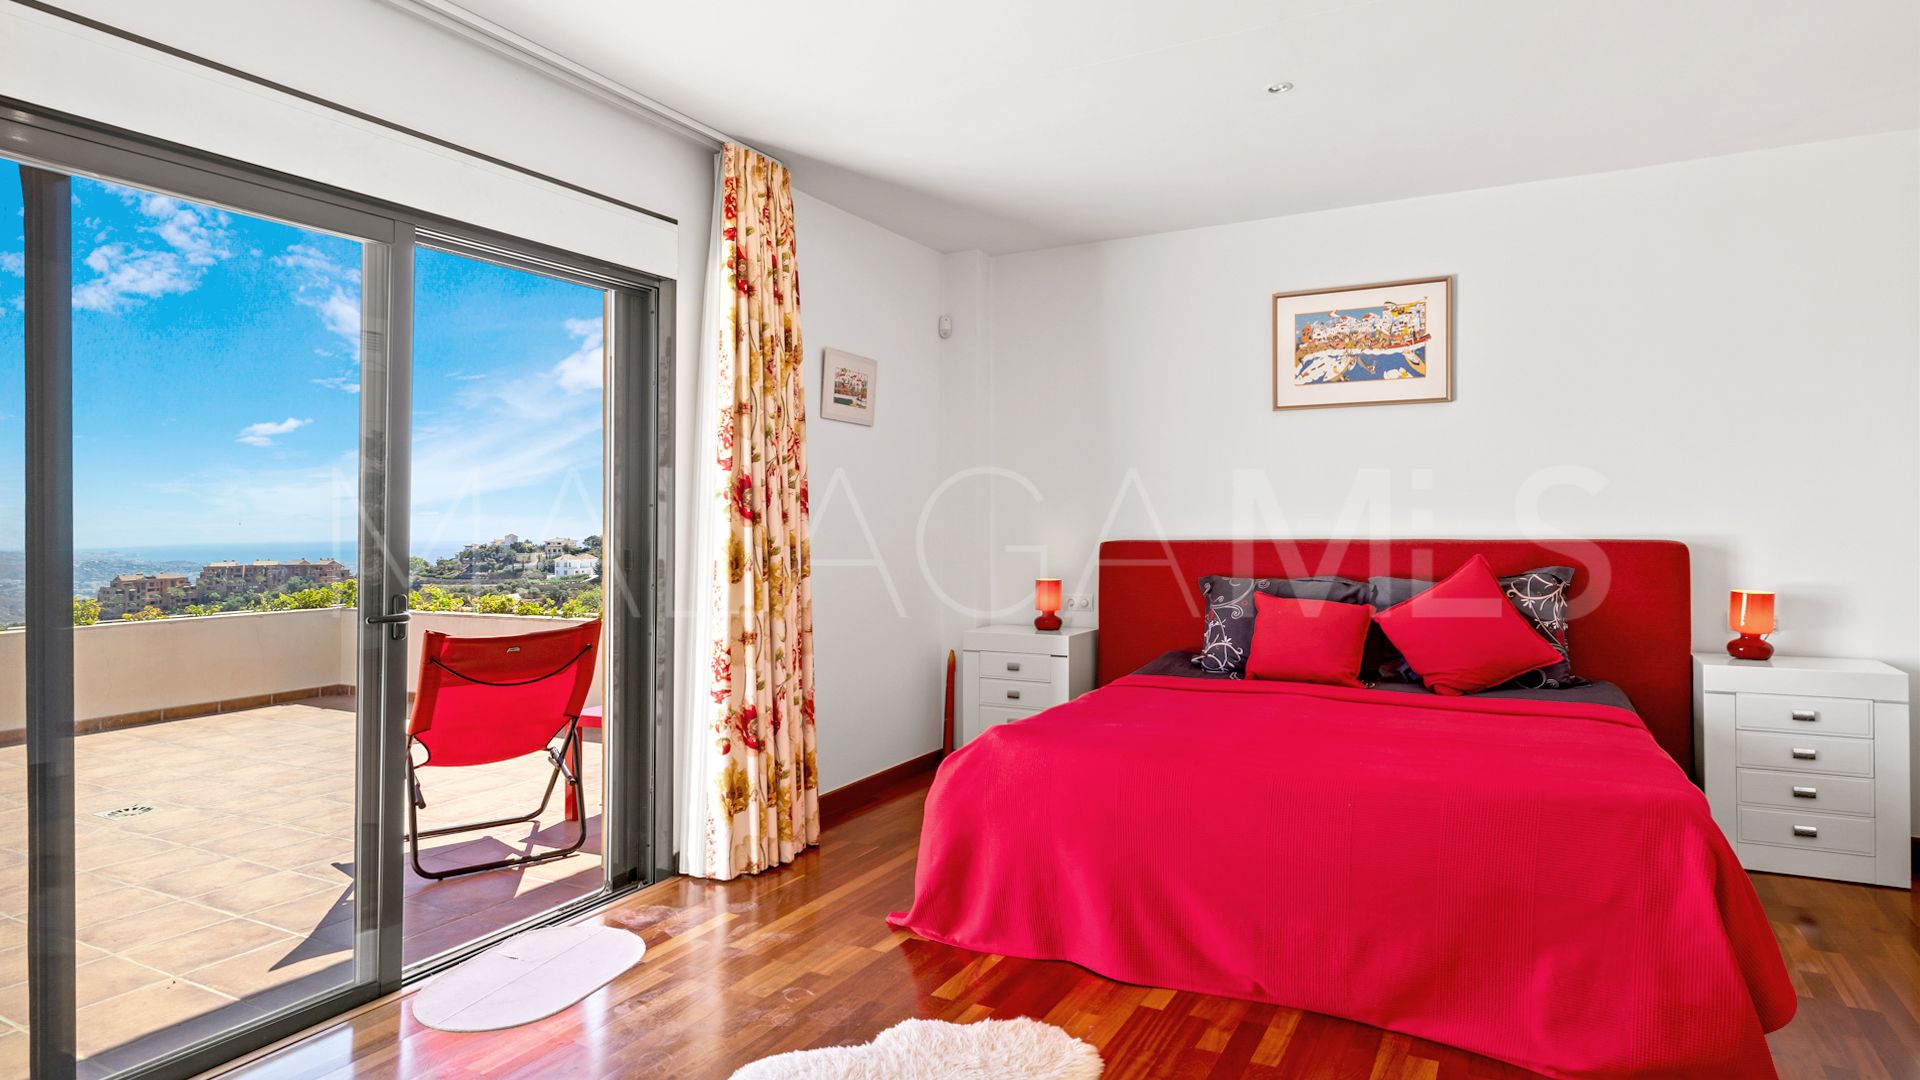 5 bedrooms villa in Marbella East for sale